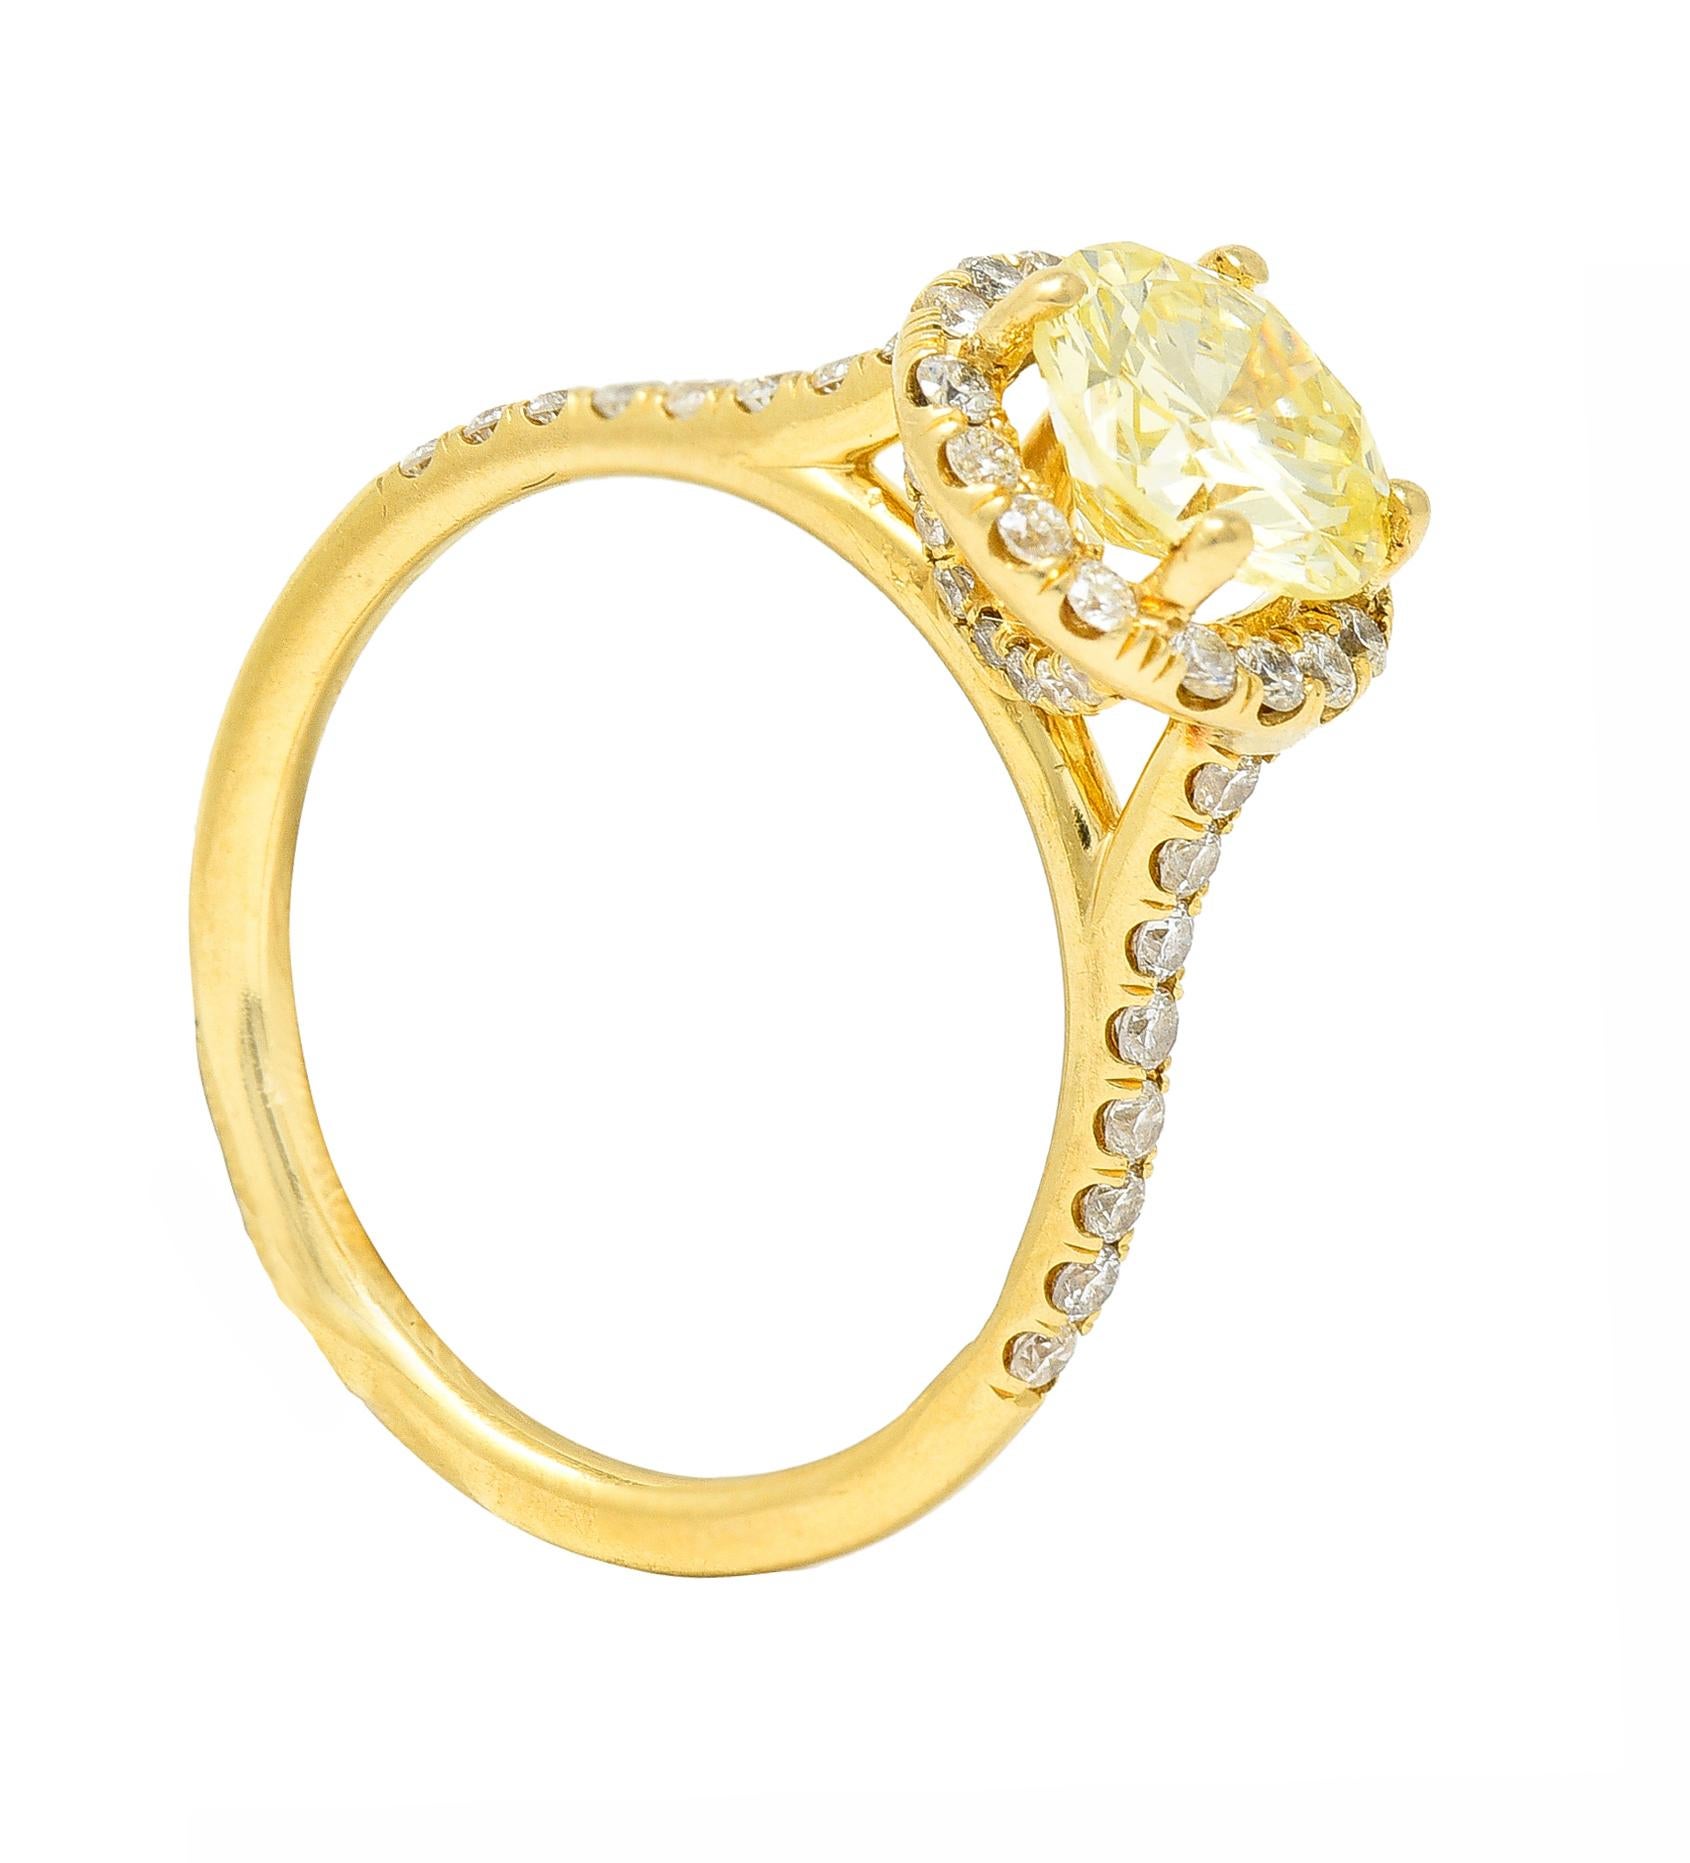 Contemporary 1.65 Carats Fancy Light Yellow Diamond 18 Karat Gold Halo Ring For Sale 7